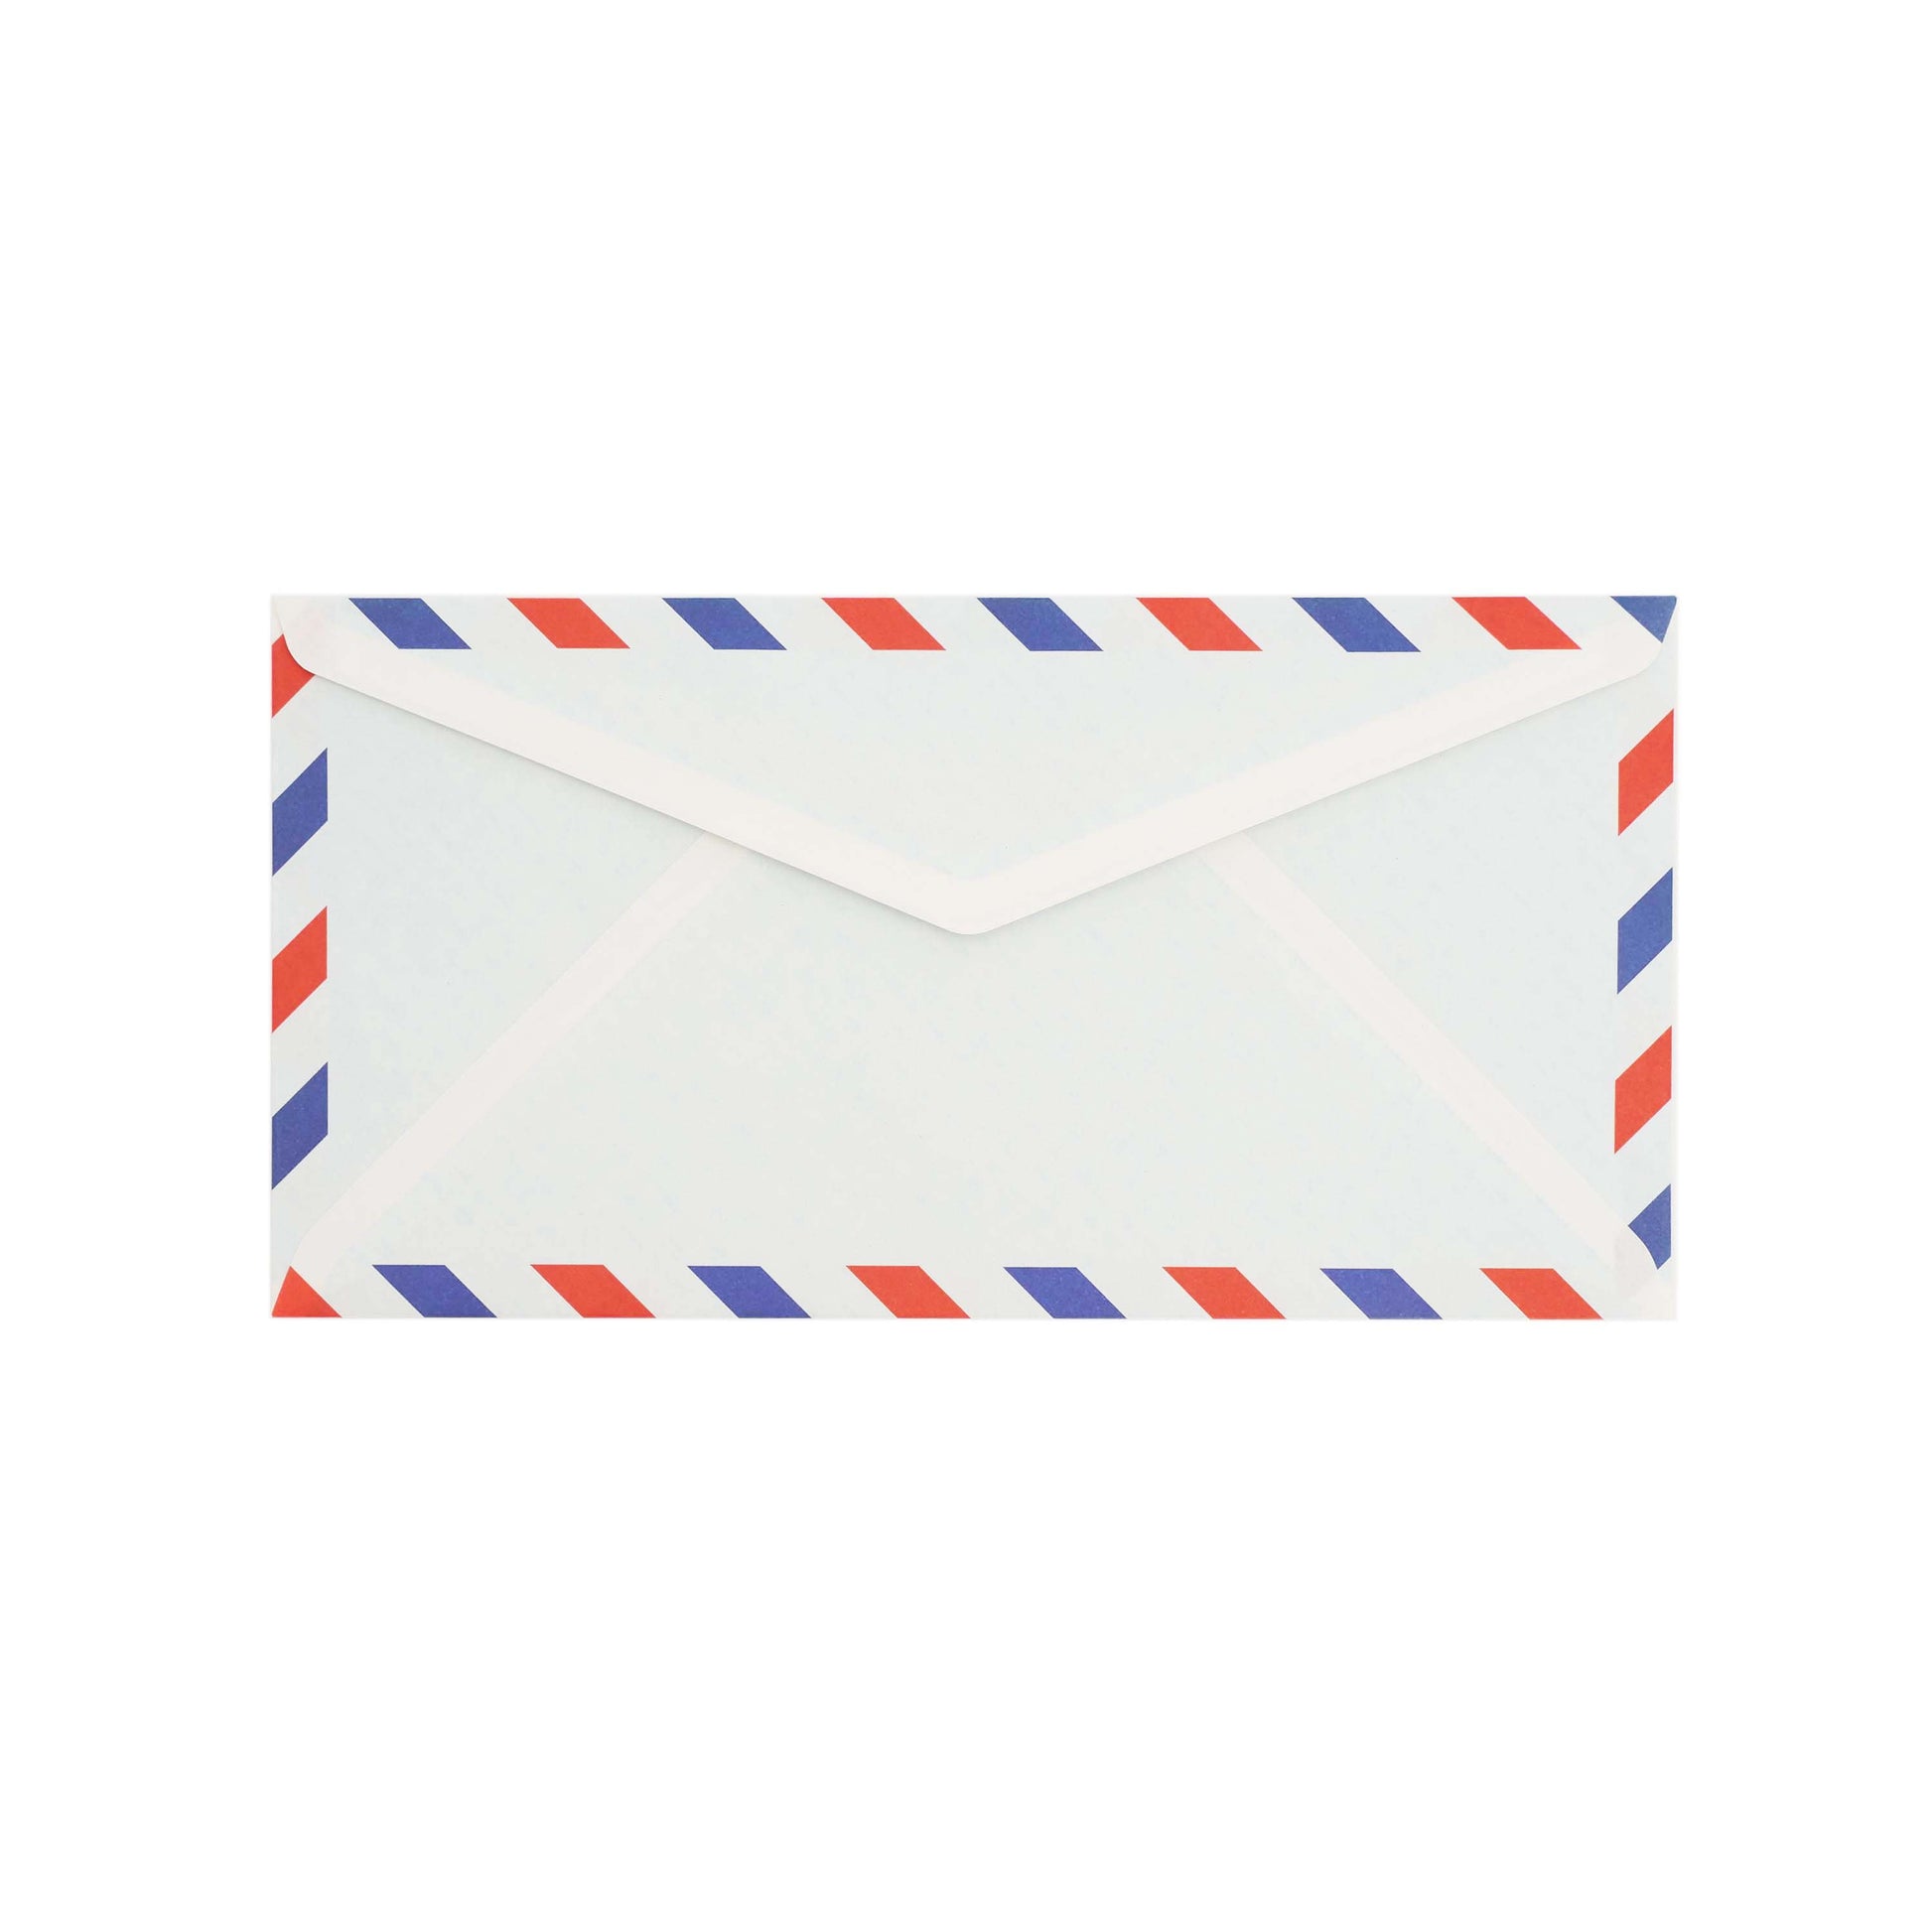 Life Airmail envelopes "via air mail" E26. Red white and blue envelopes back